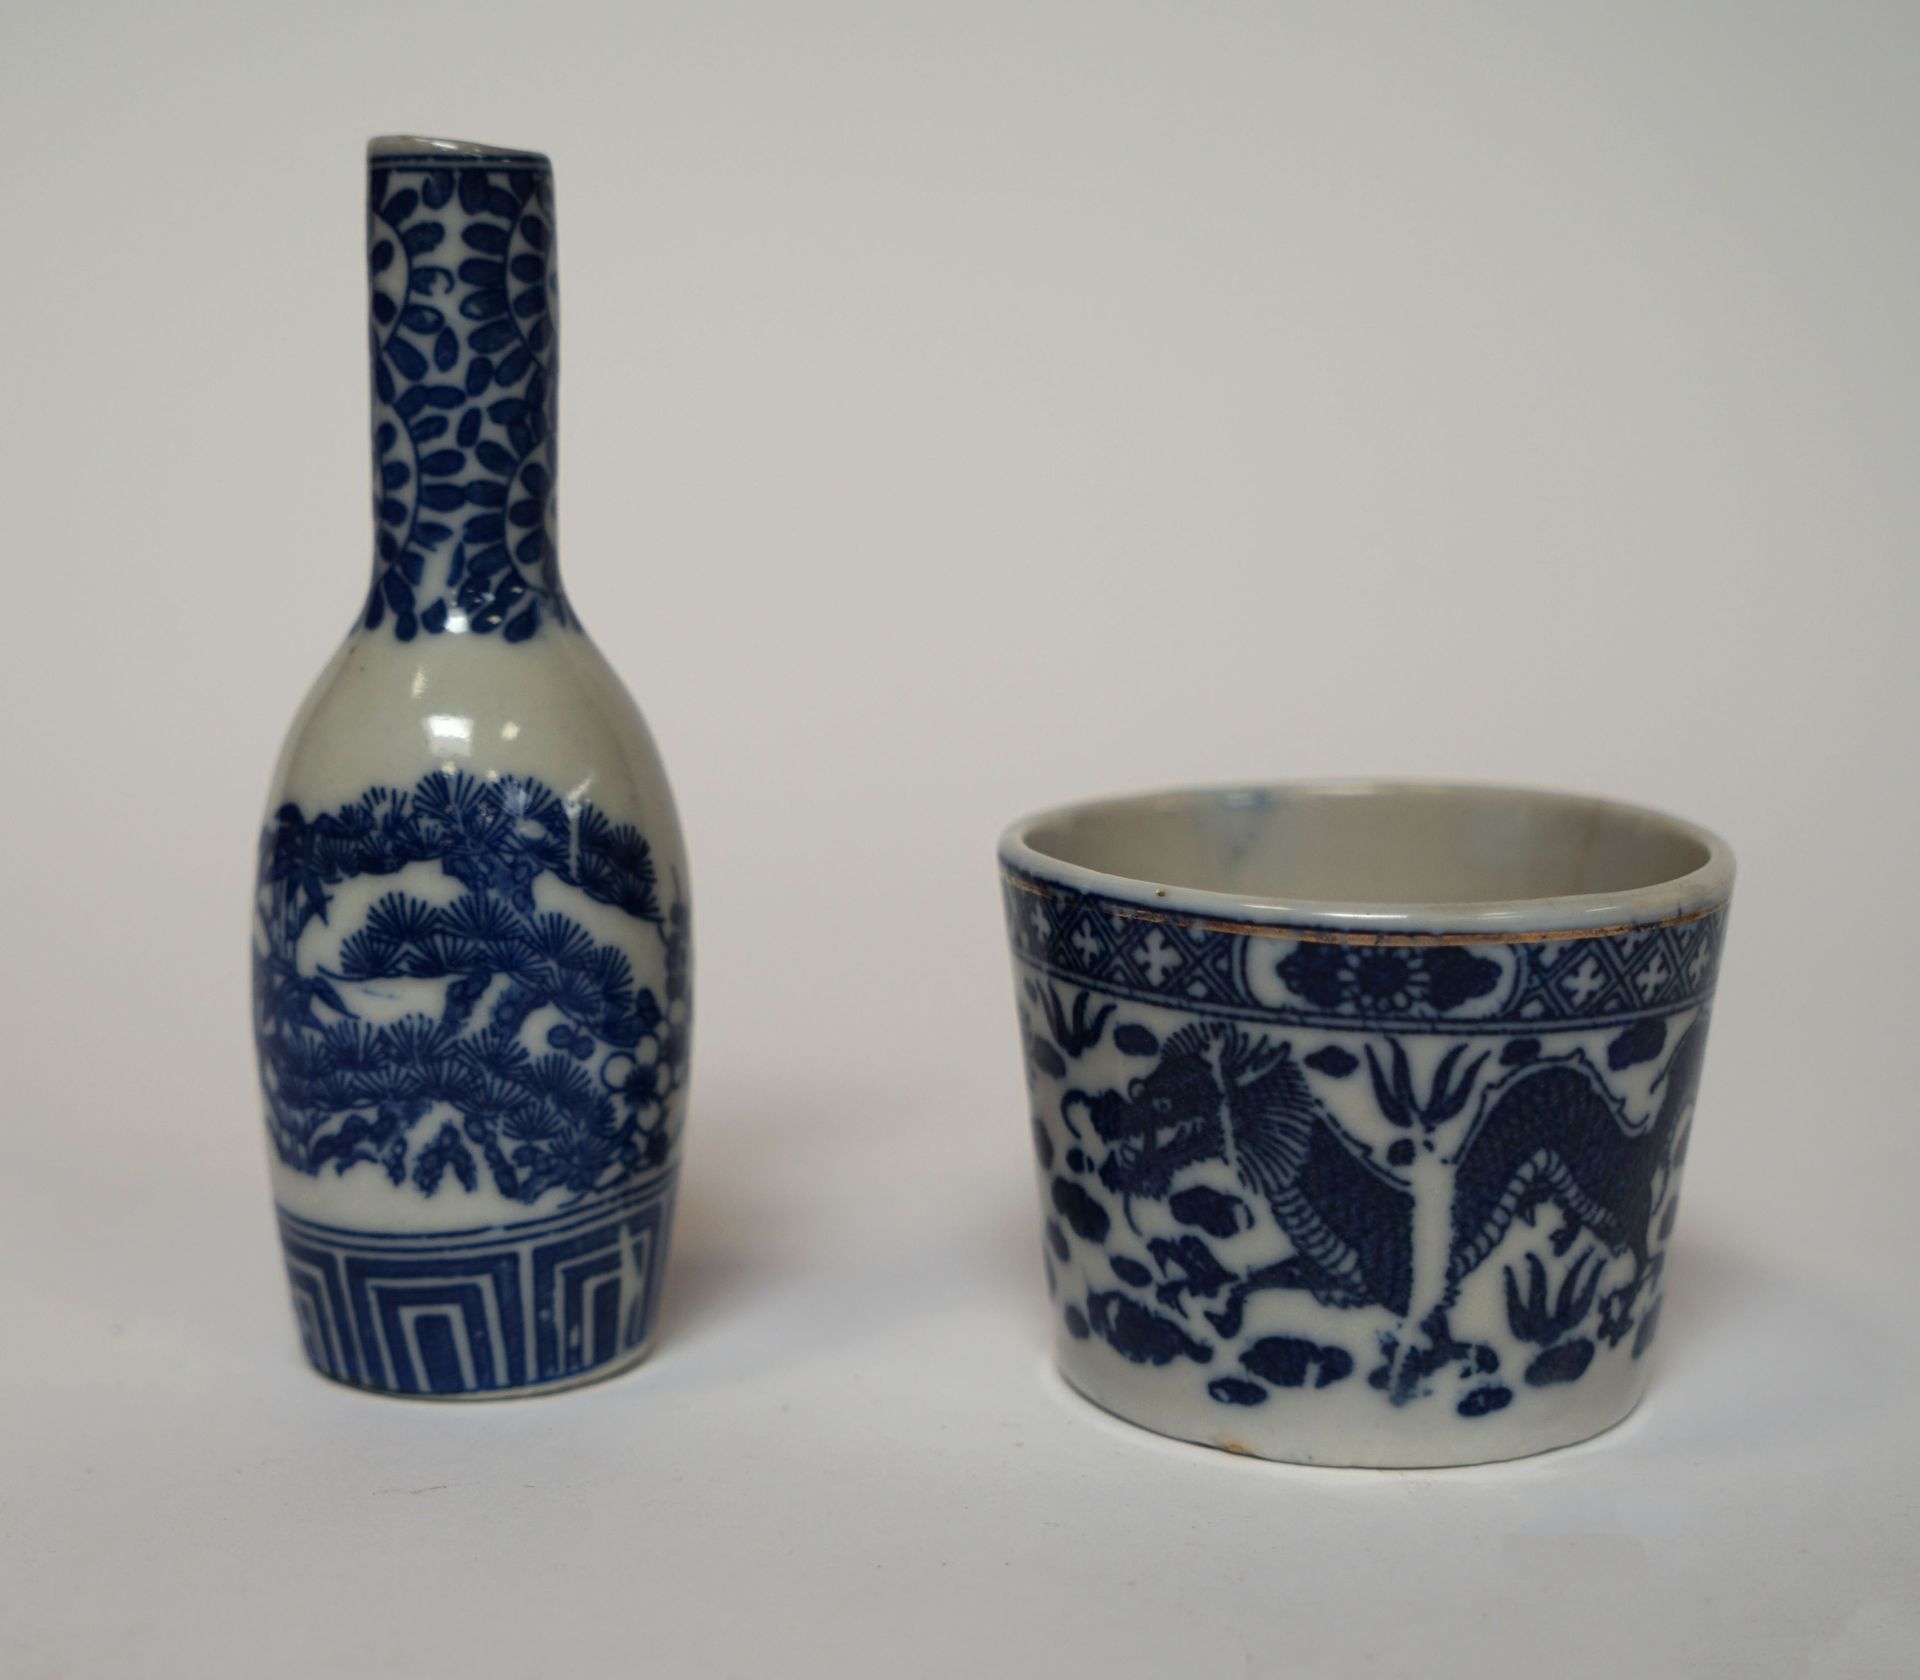 Null 中国。青花瓷瓶和壶，青花龙和松枝的装饰。高11和5厘米。